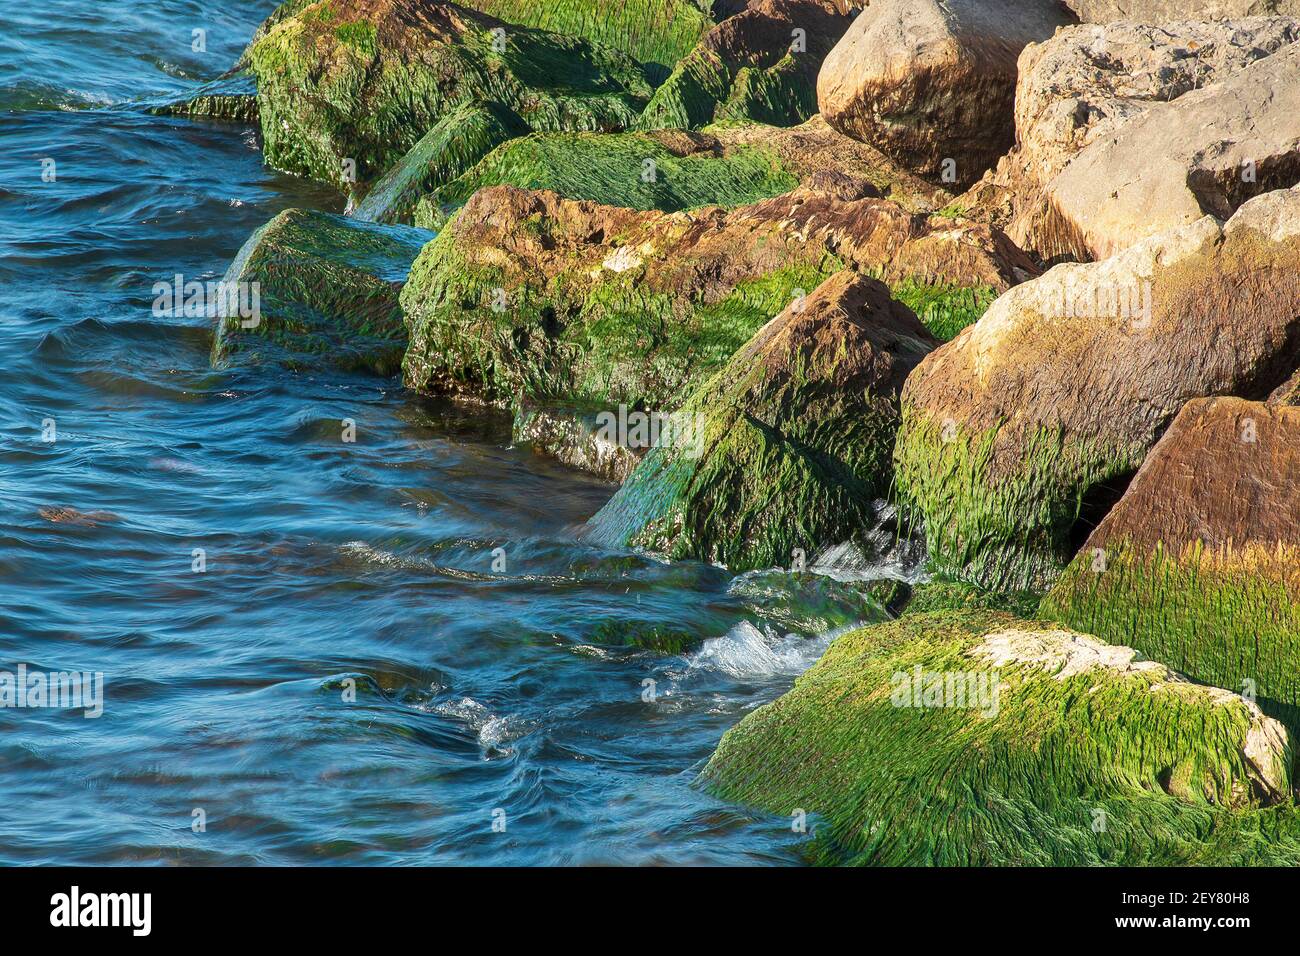 Green algae growing on large beach rocks with blue lake water Stock Photo